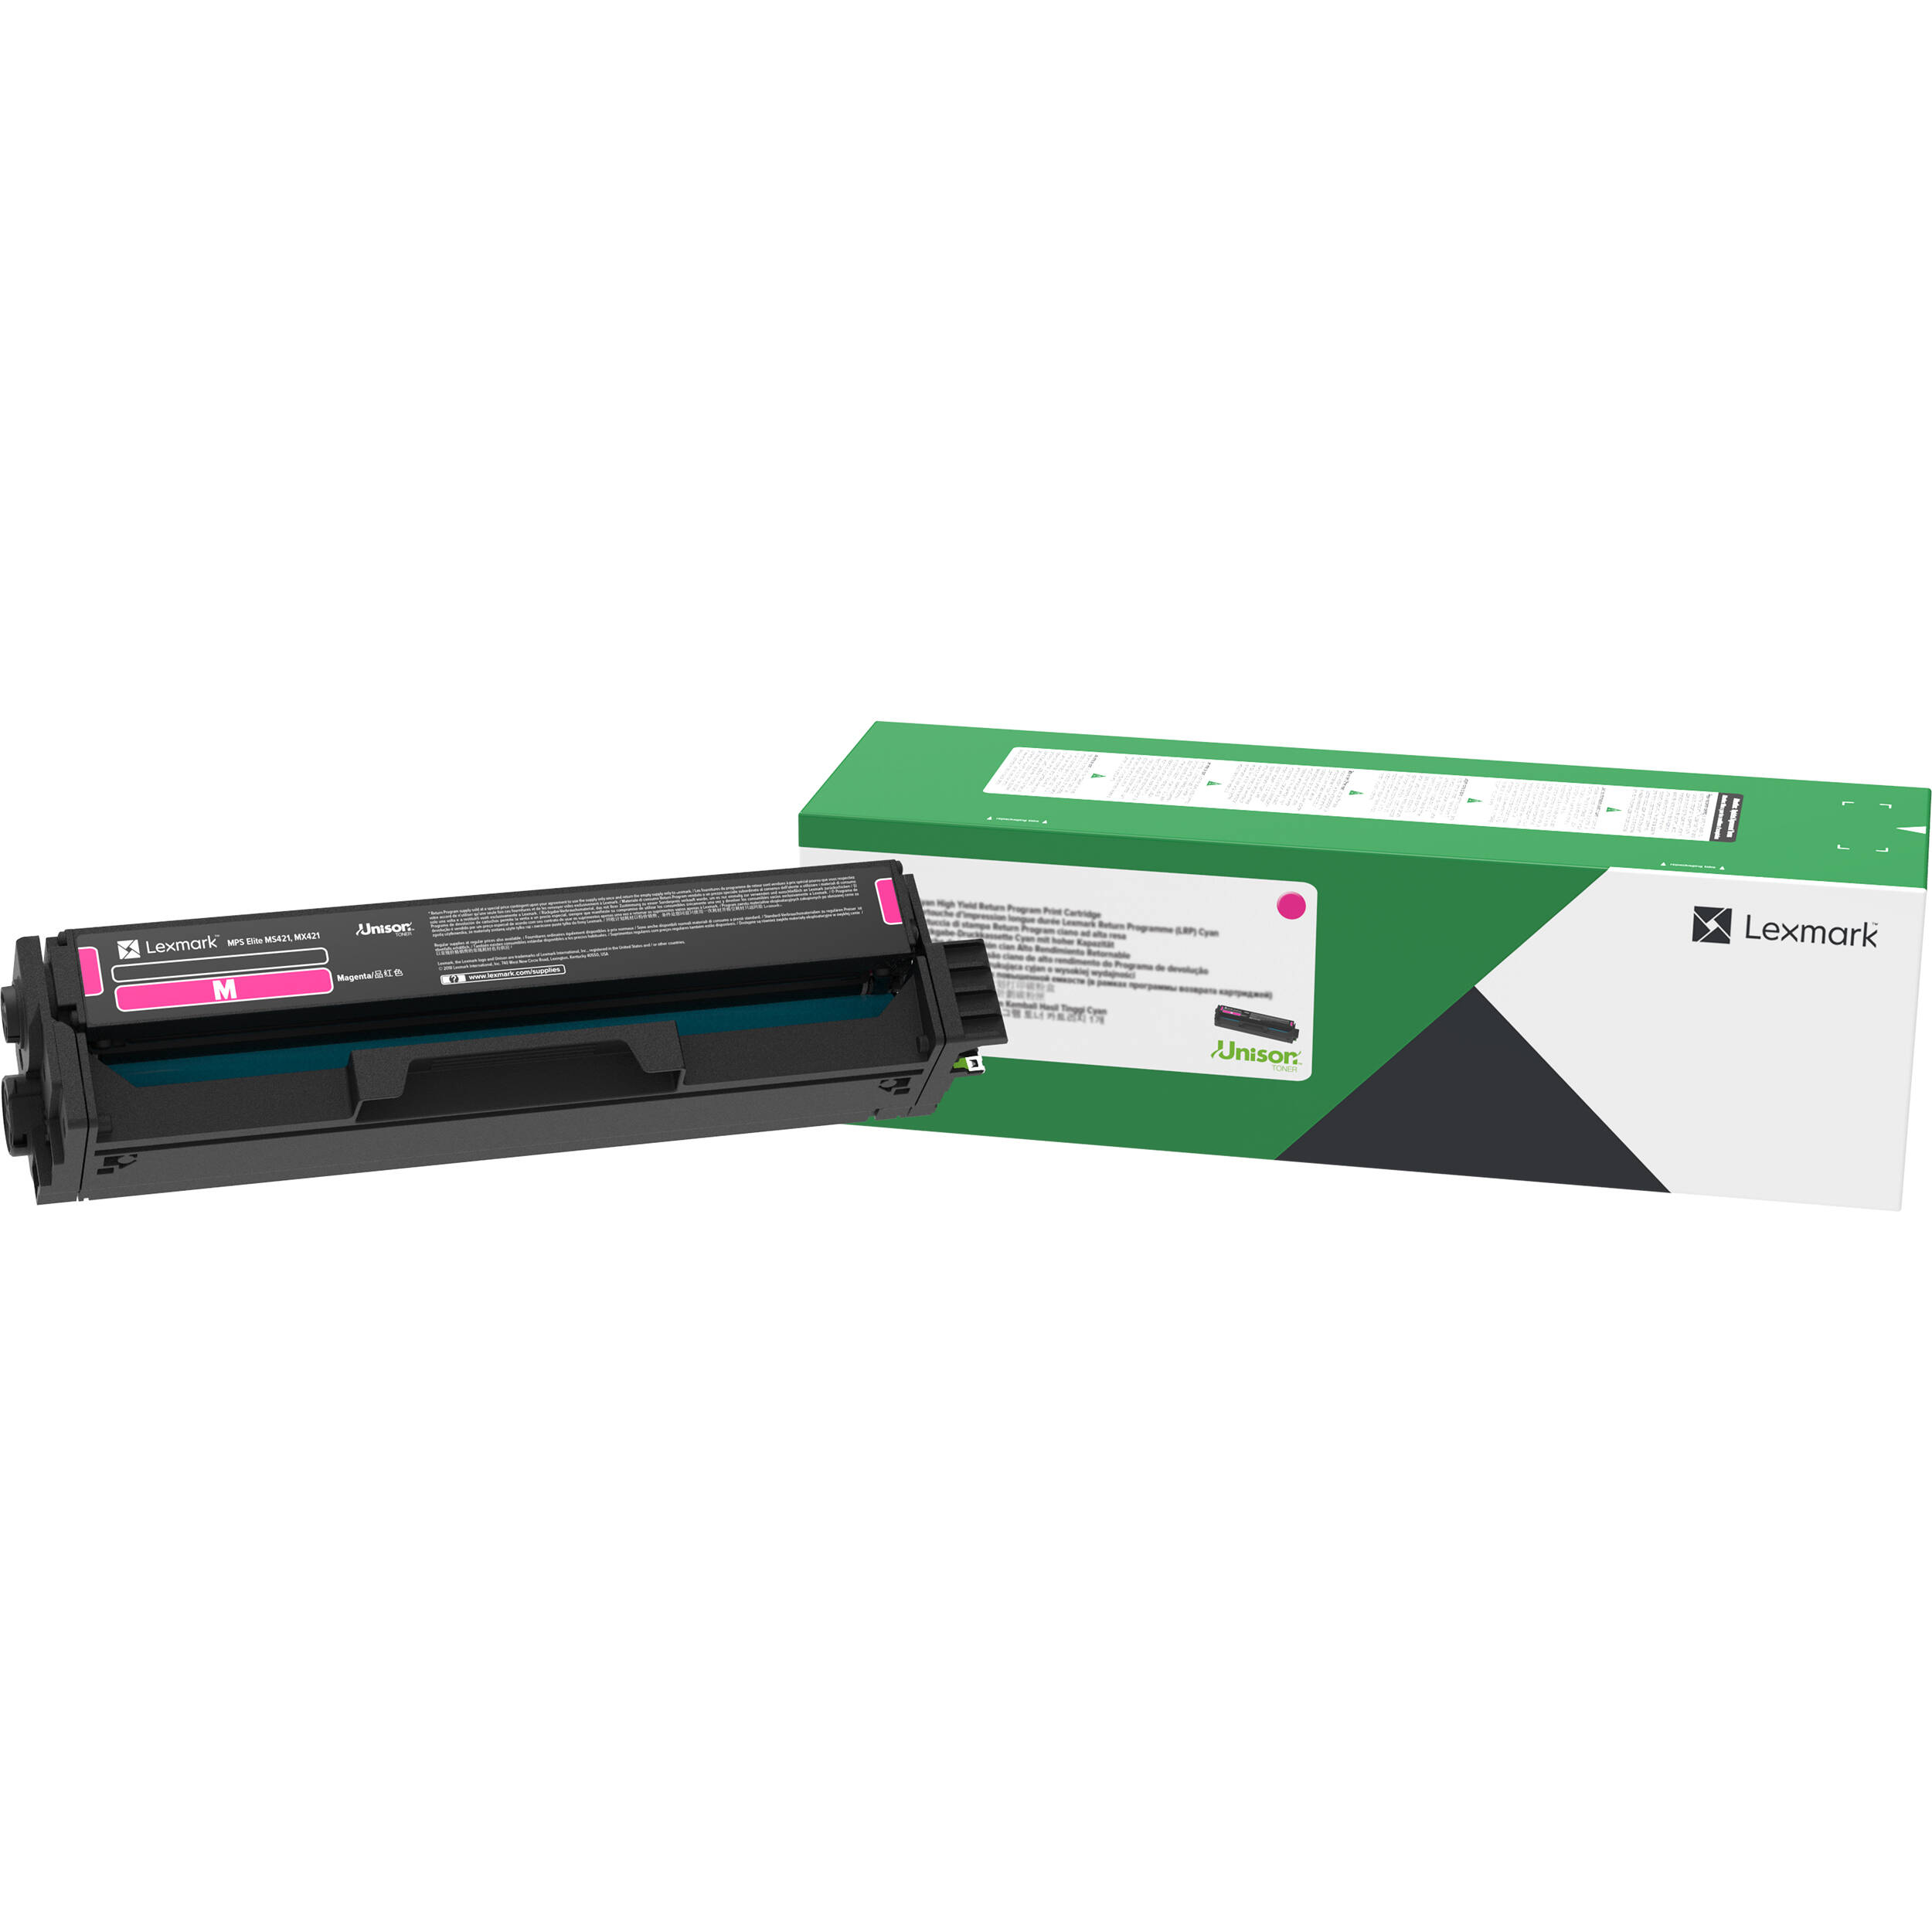 Lexmark 20N10M0 Magenta Return Program Toner Cartridge for Select Color Laser Printers